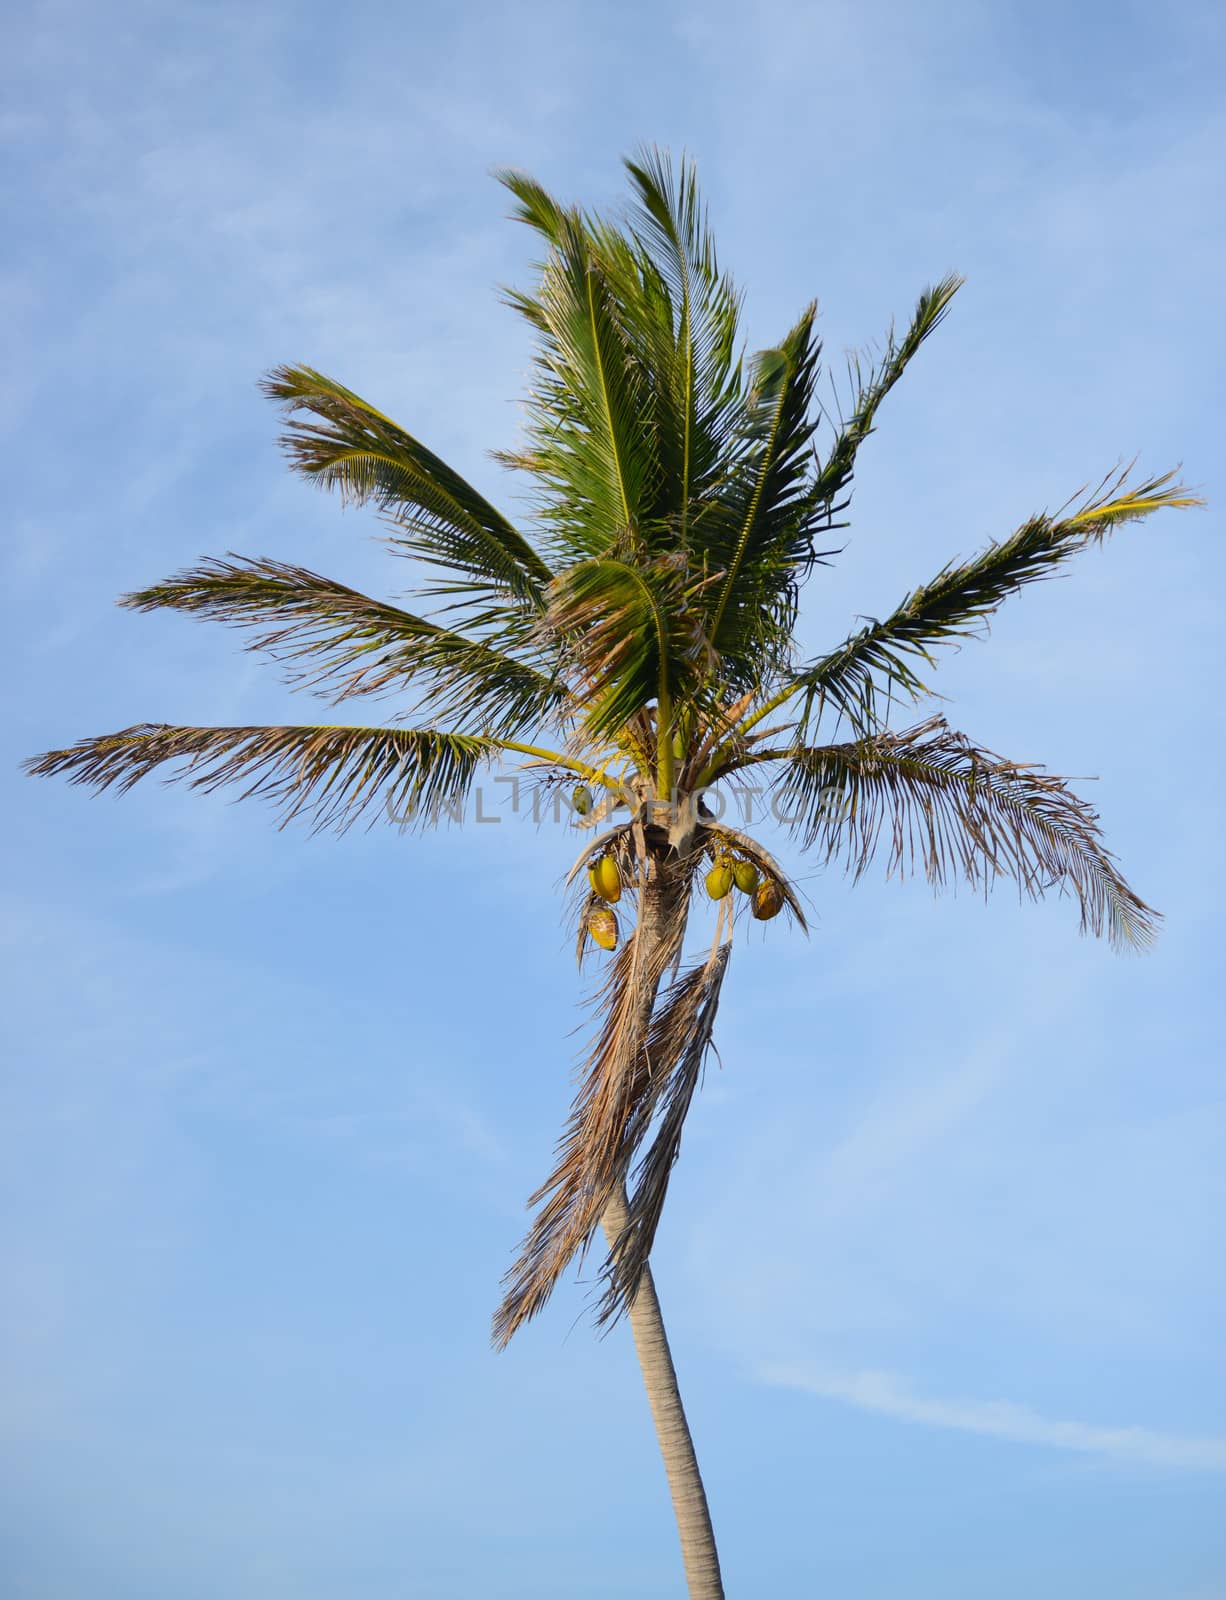 Coconut palm tree against a blue sky